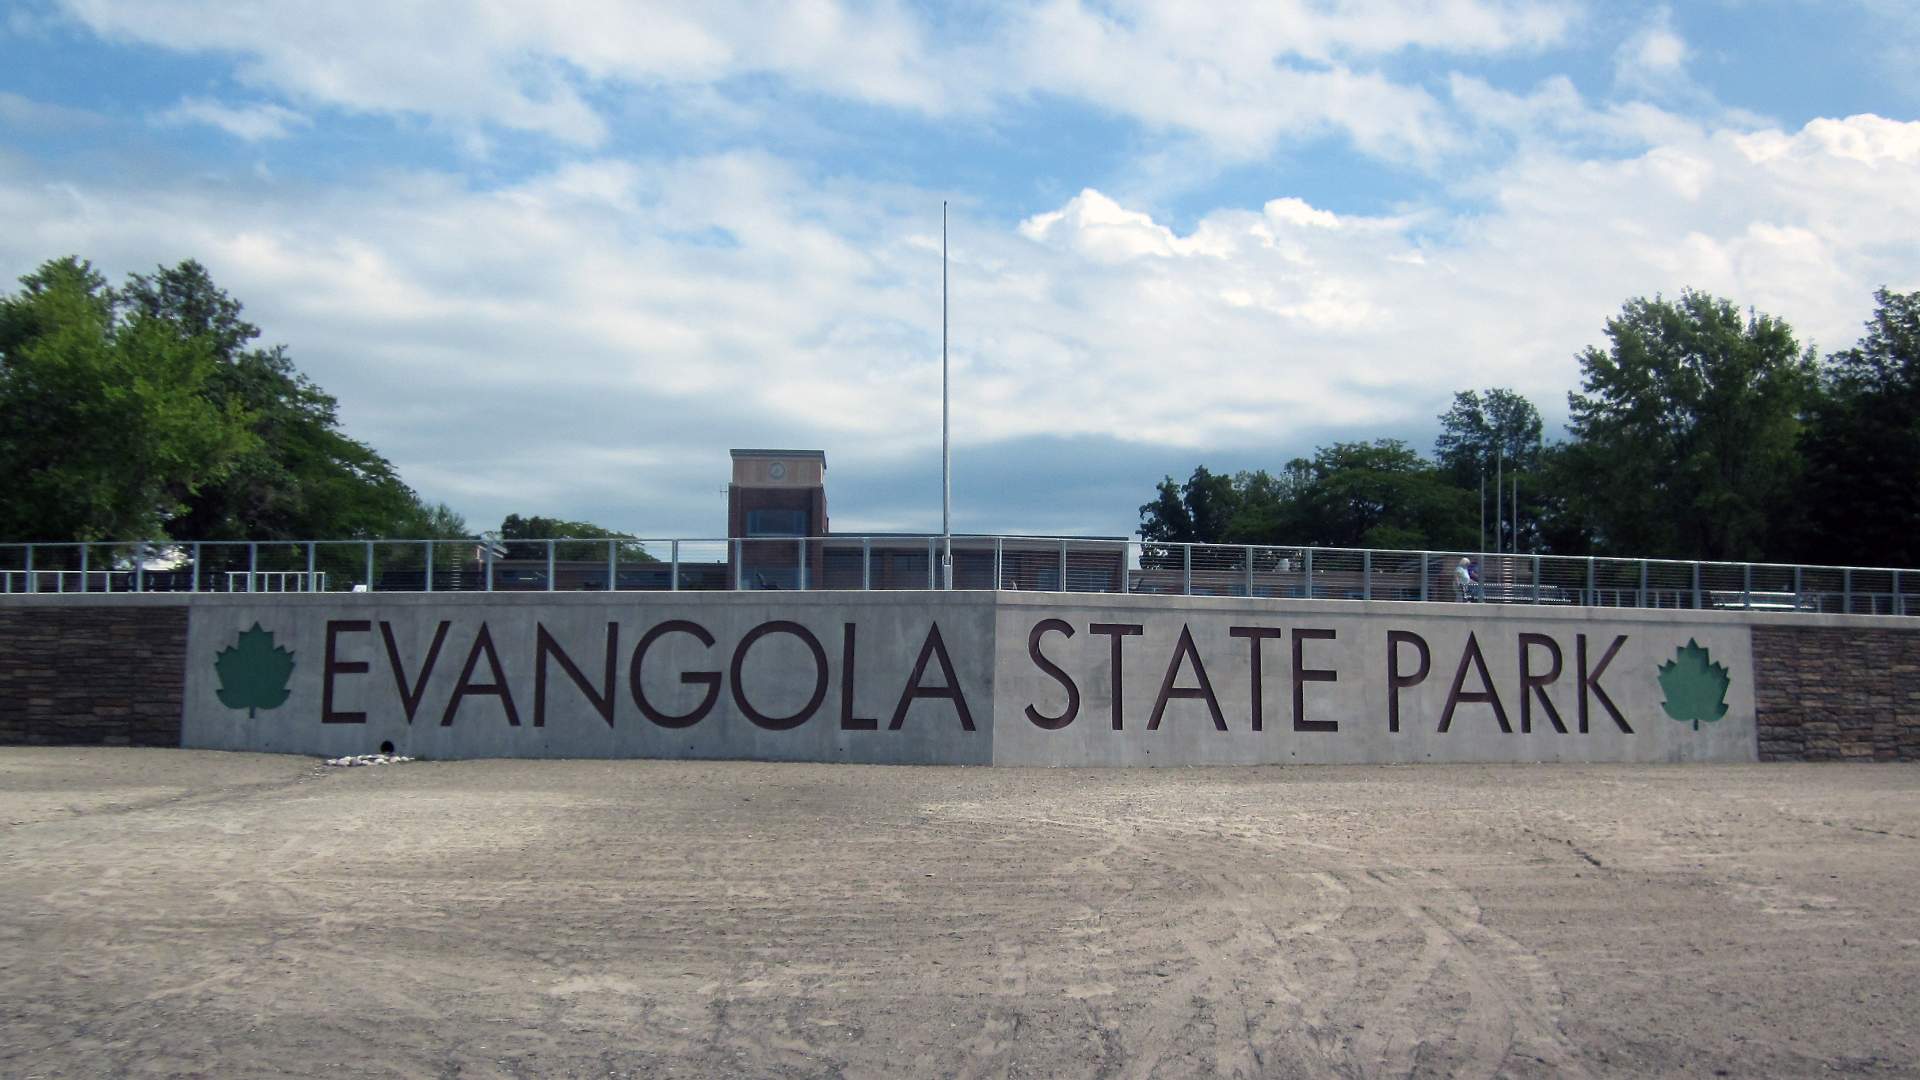 Evangola State Park, Terrace Retaining Wall Rehabilitation